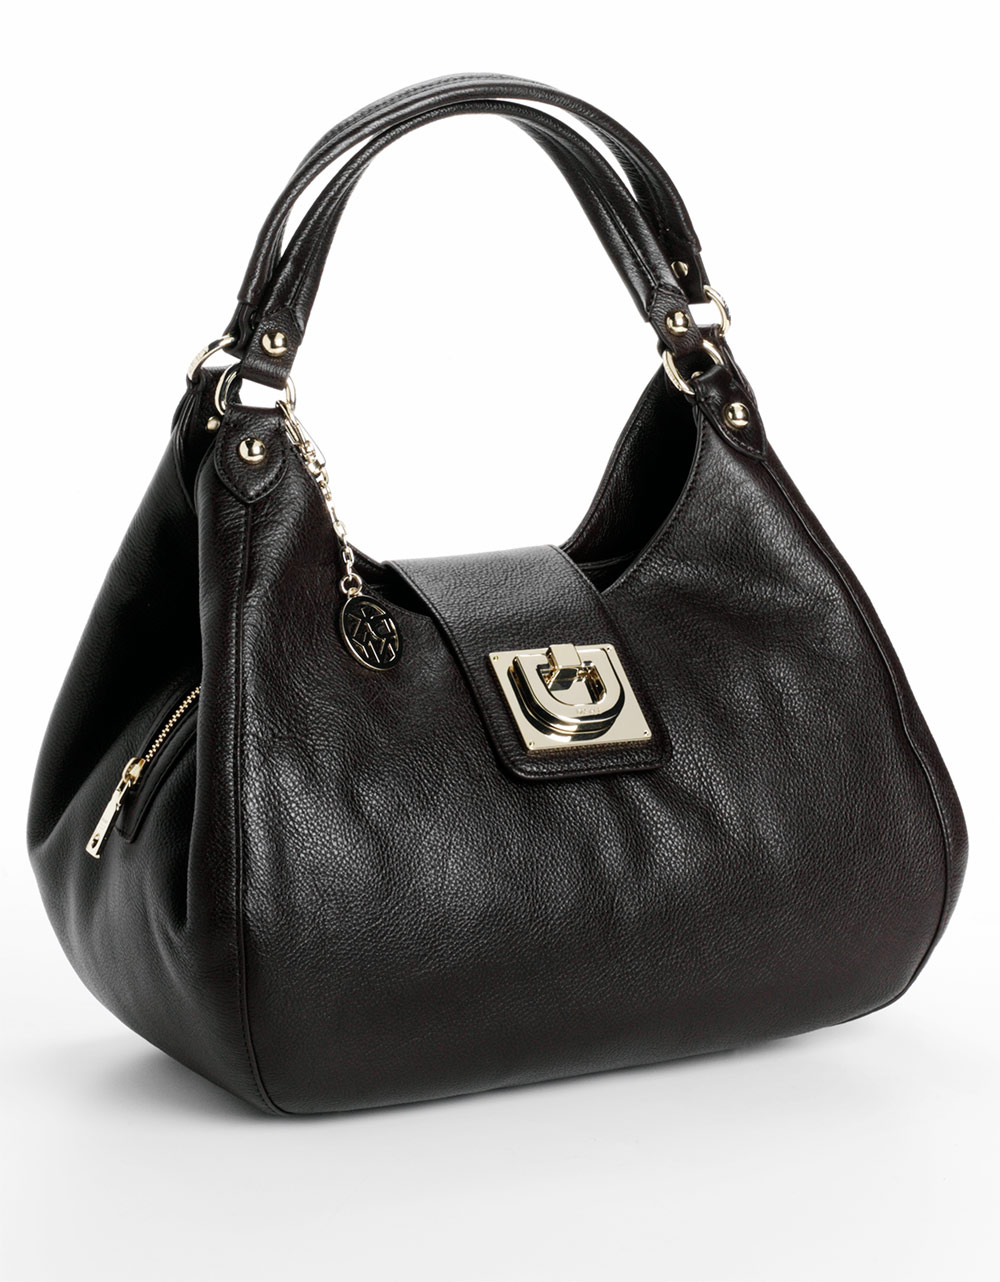 DKNY Heritage Vintage Leather Hobo Bag in Black - Lyst